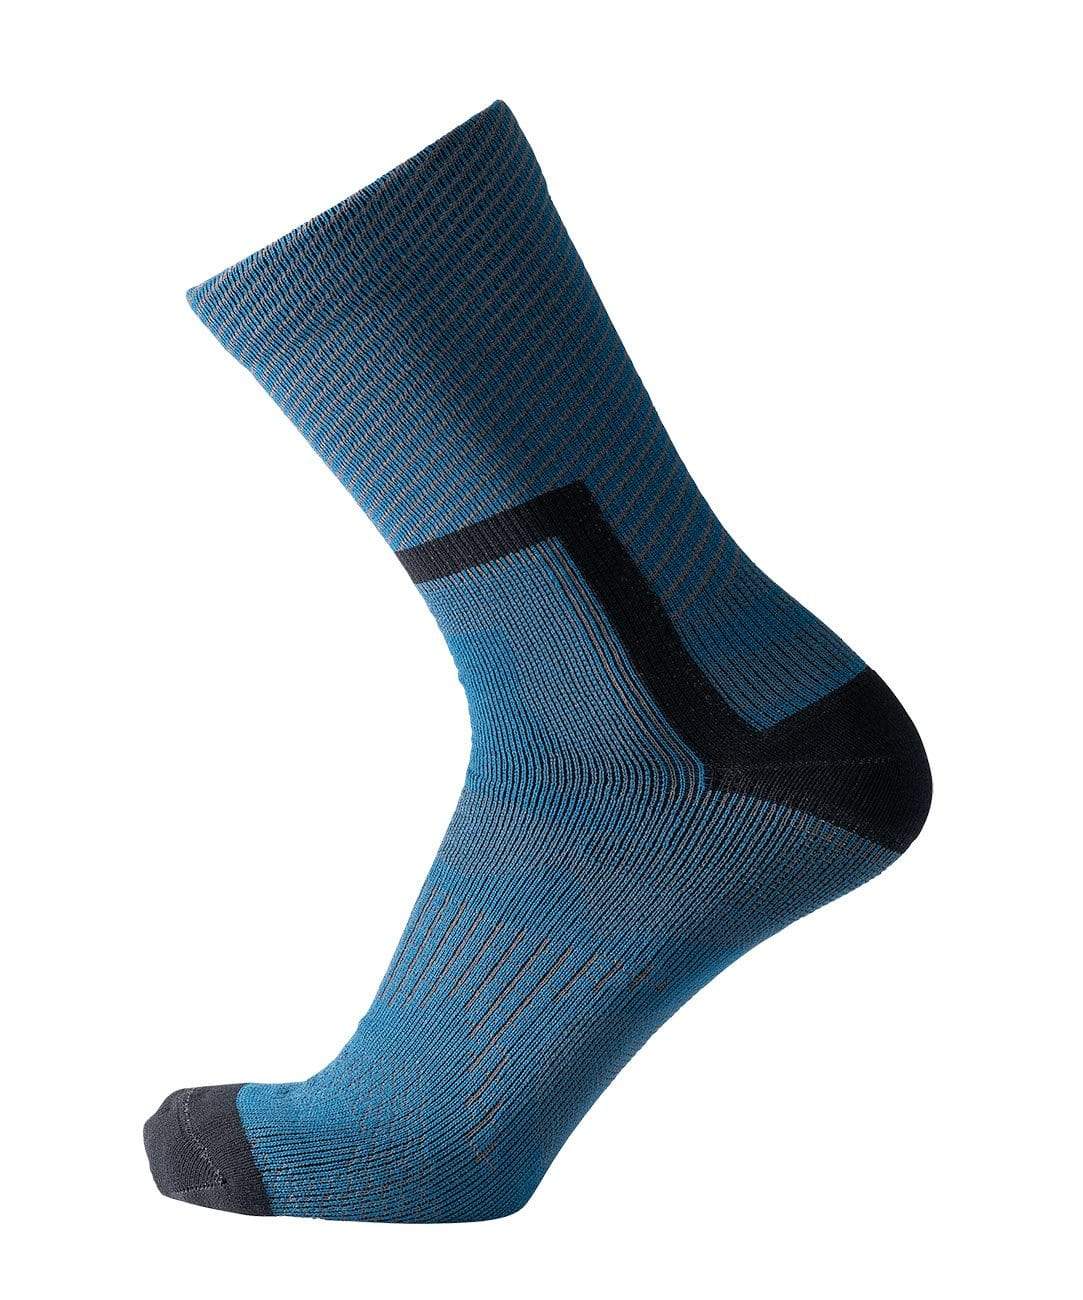 TRAIL-DRY Running Extra thin Waterproof Socks Blue